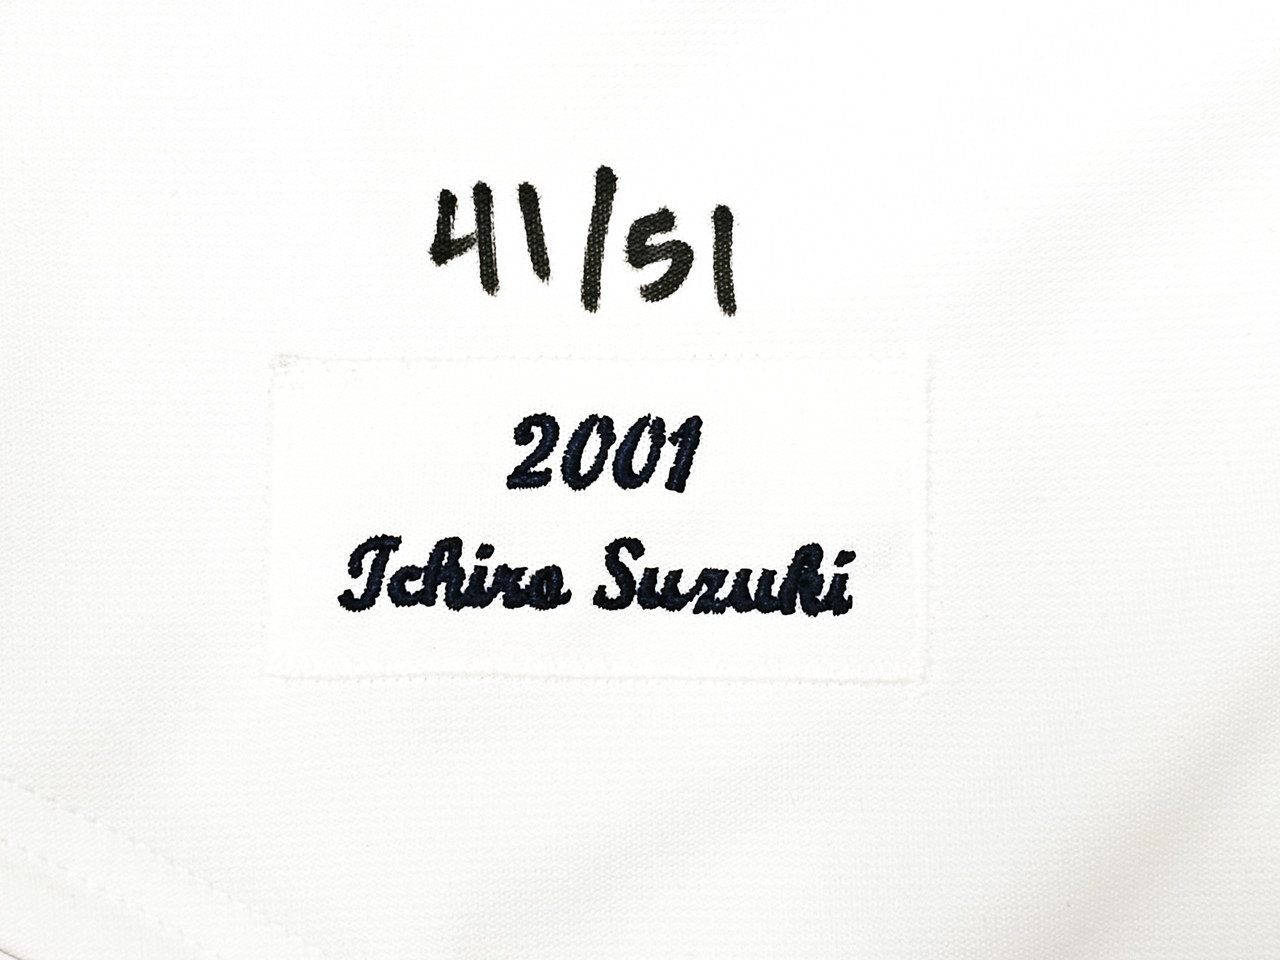 Ichiro Suzuki Seattle Mariners Mitchell & Ness 2001 MLB All-Star Game  Cooperstown Collection Authentic Jersey - White